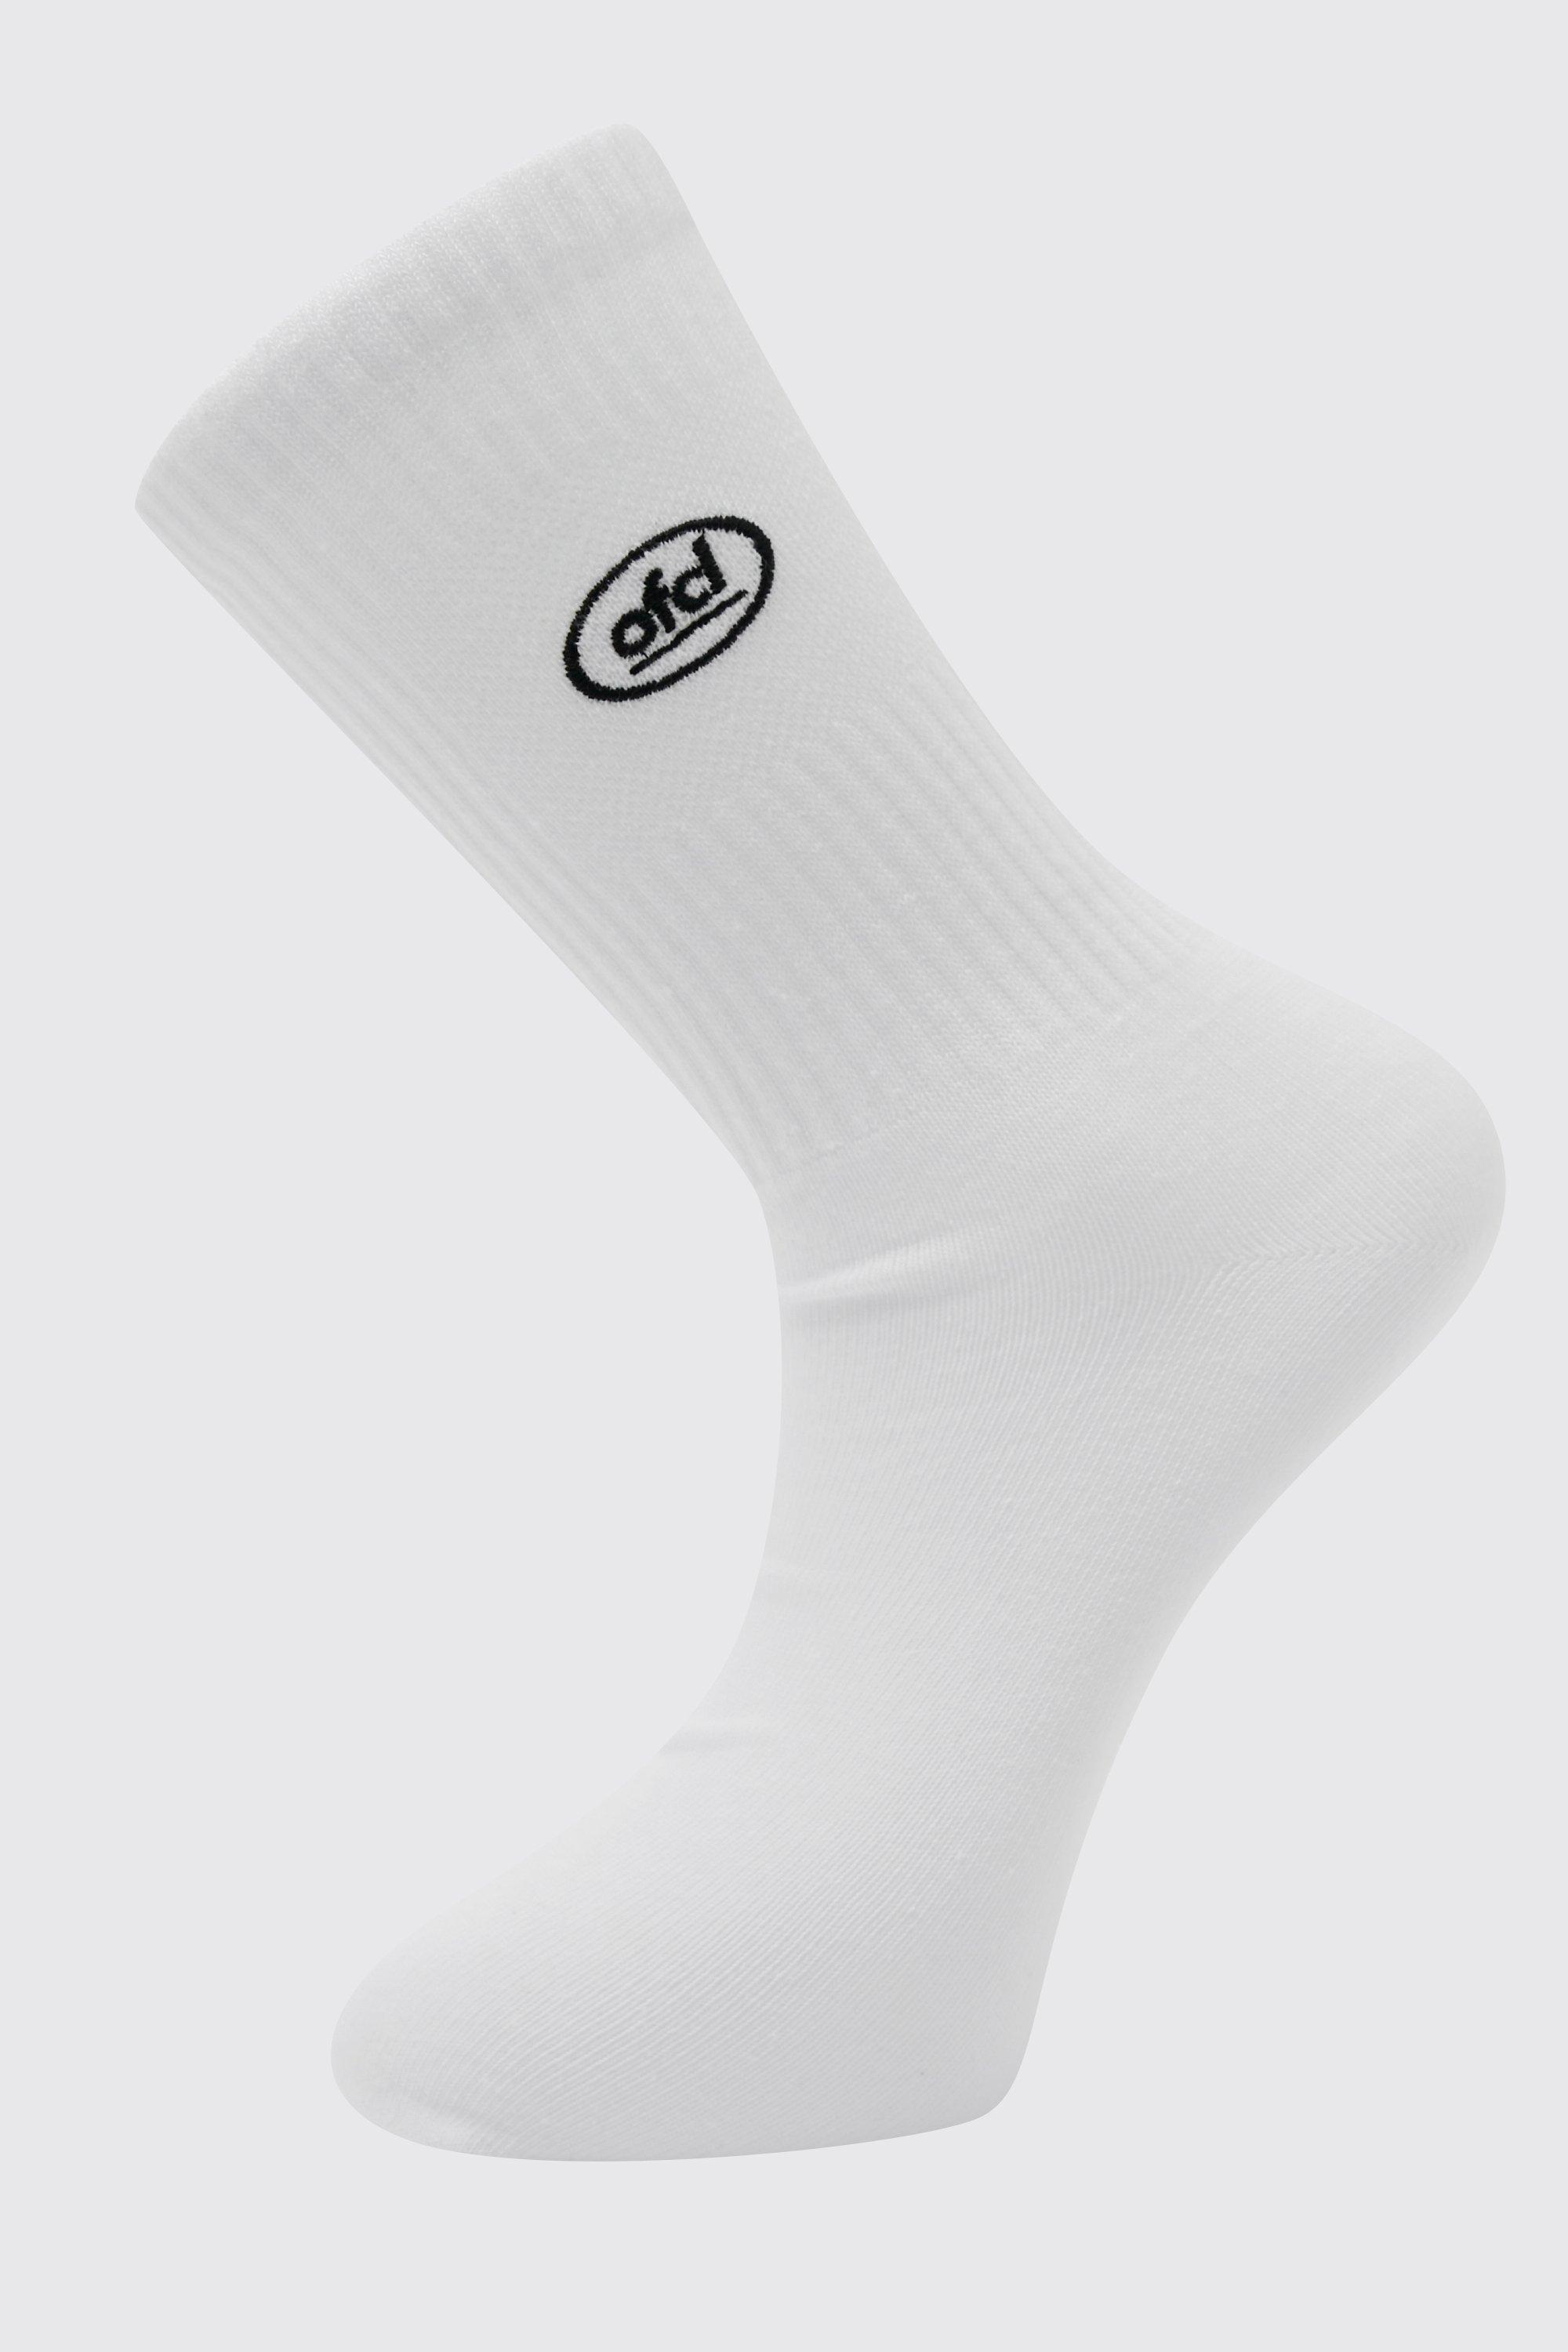 men's embroidered ofcl sport socks - white - one size, white